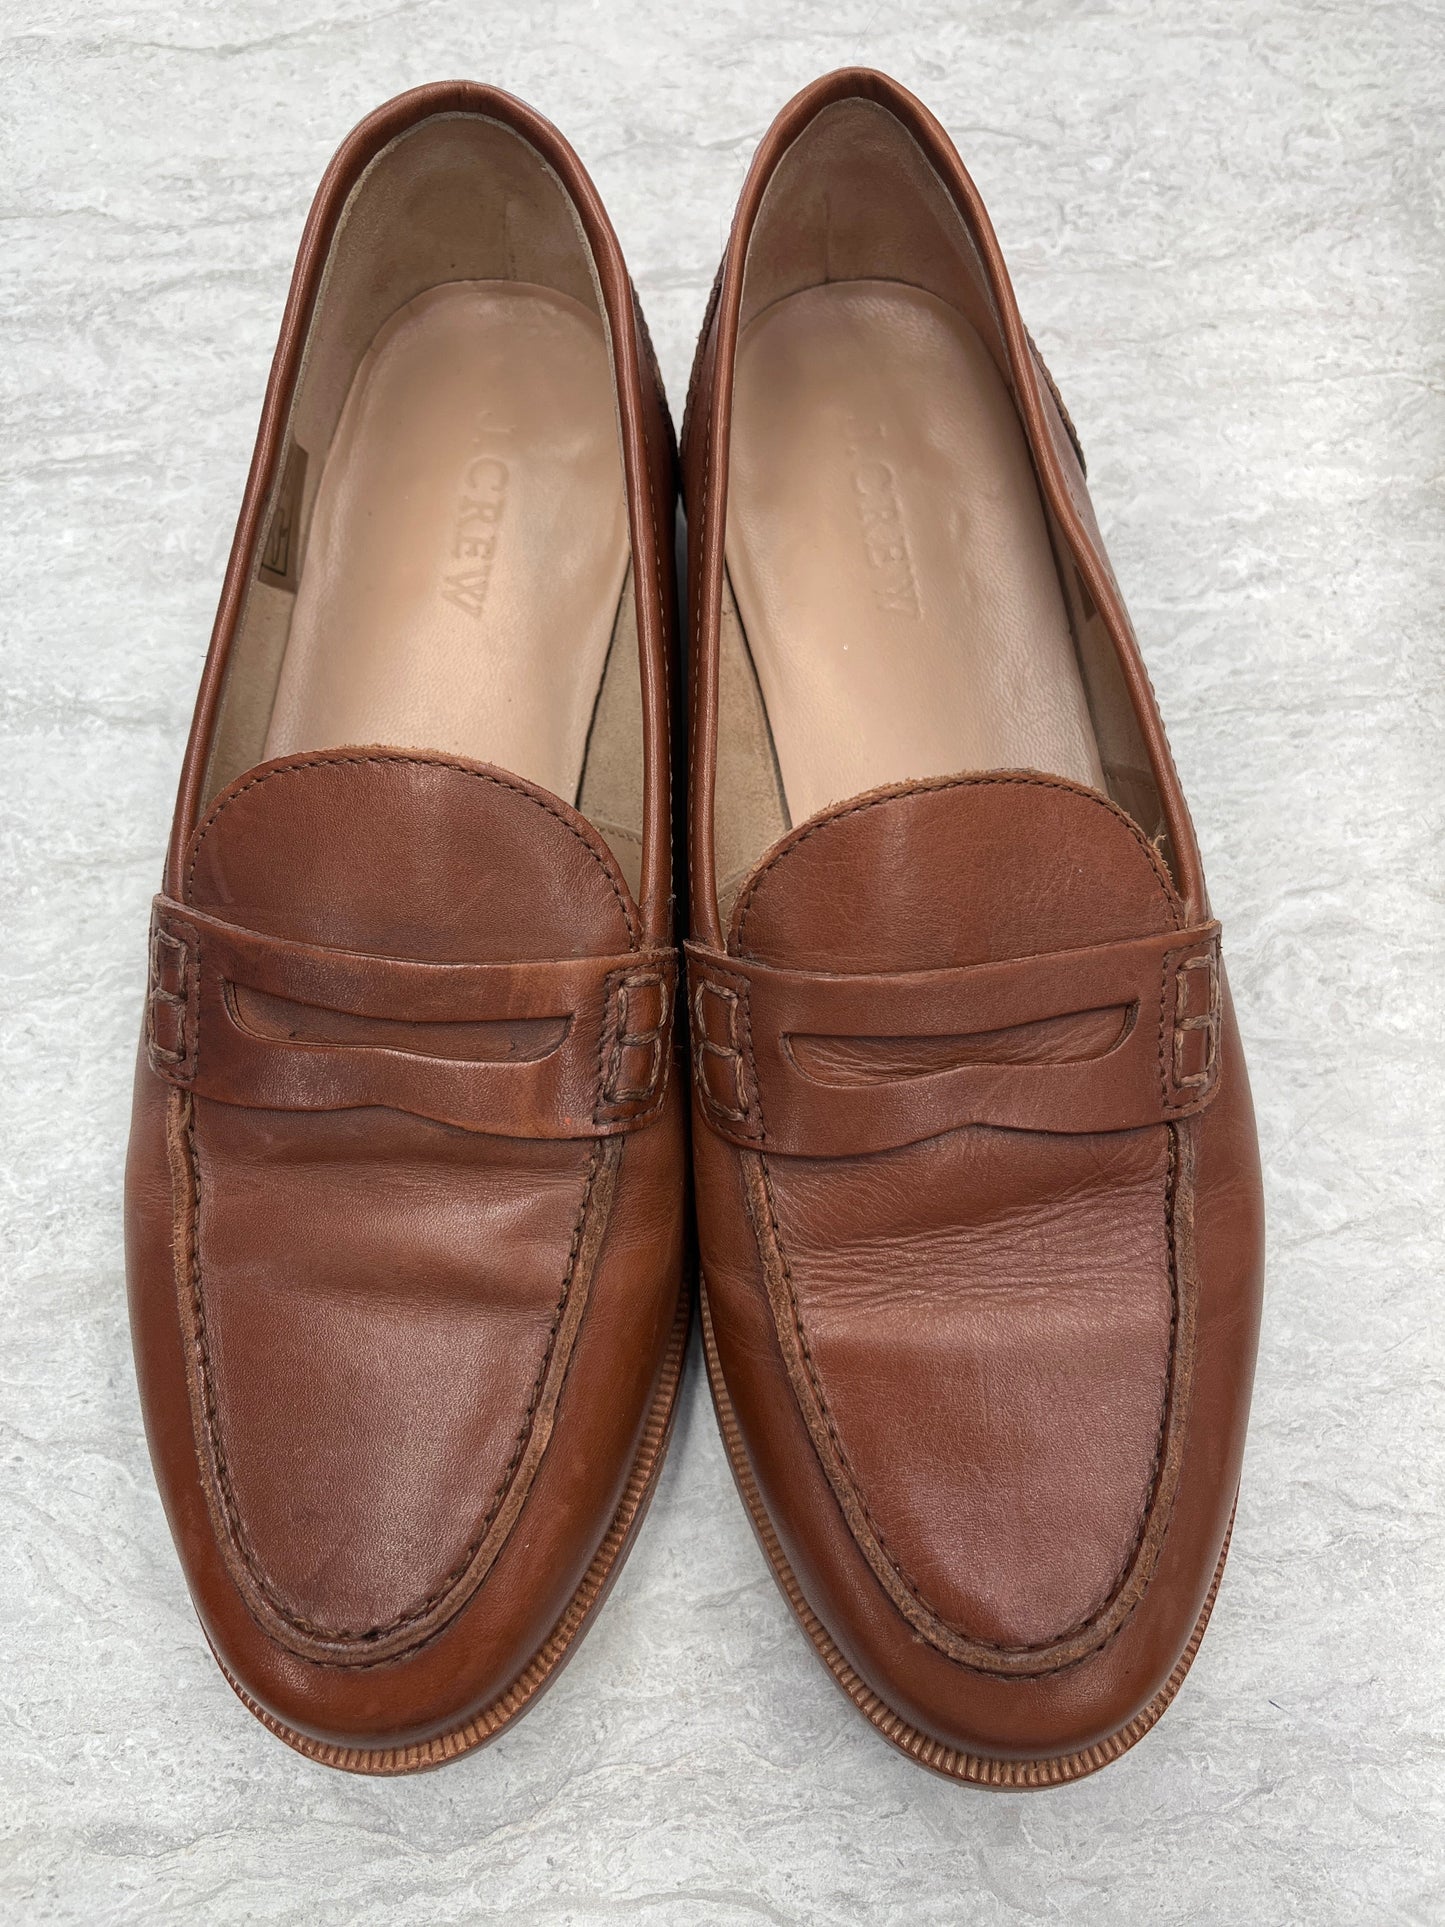 Brown Shoes Flats J. Crew, Size 7.5